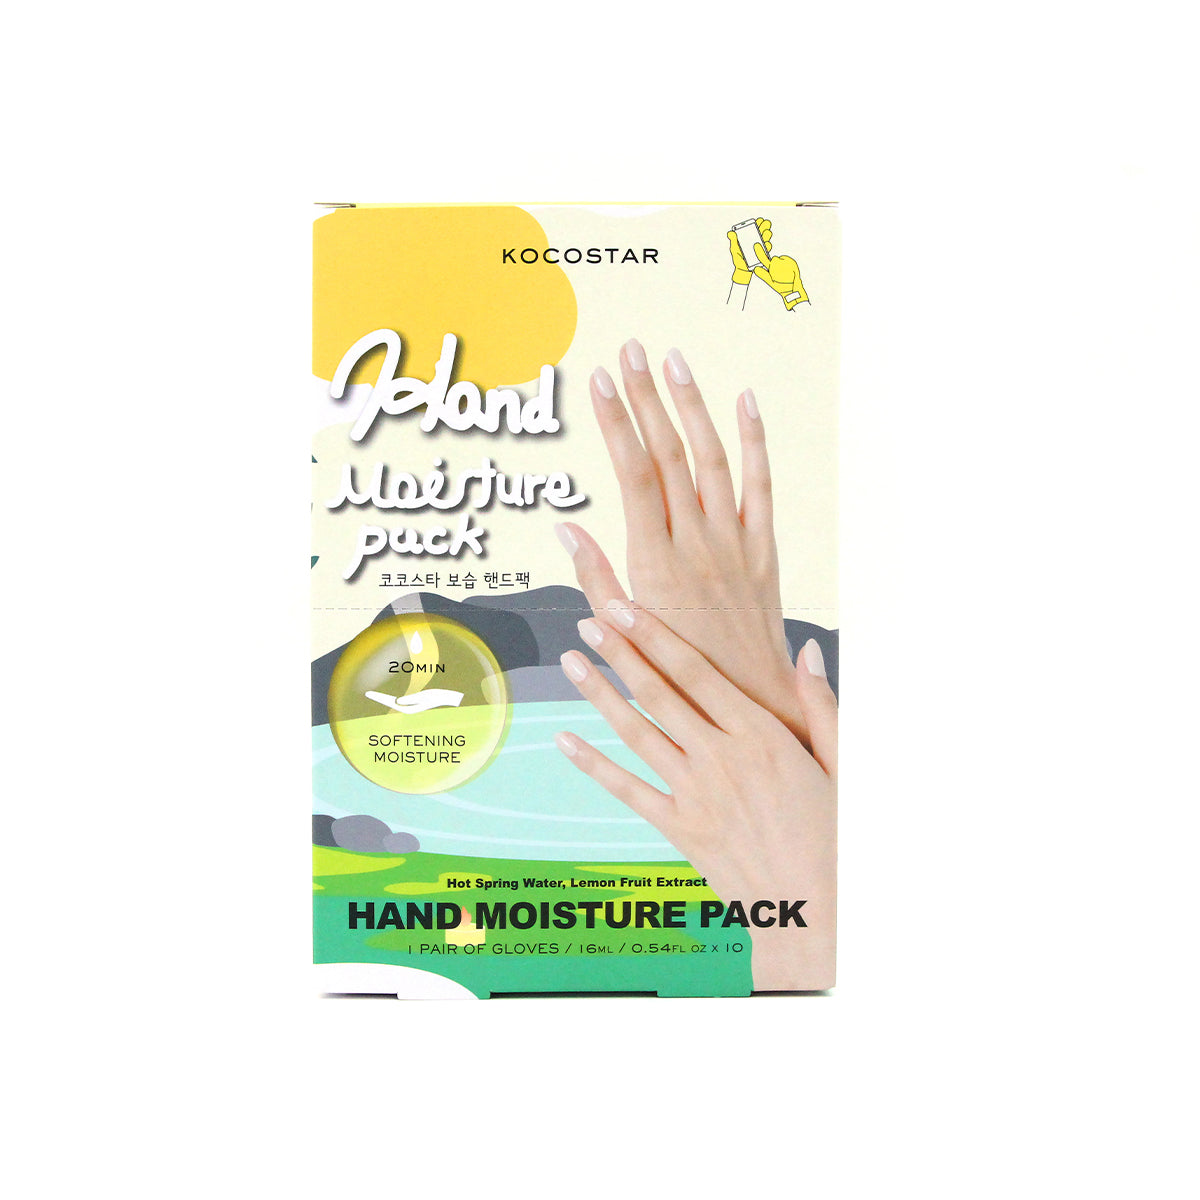 Hand Moisture Pack, Softening